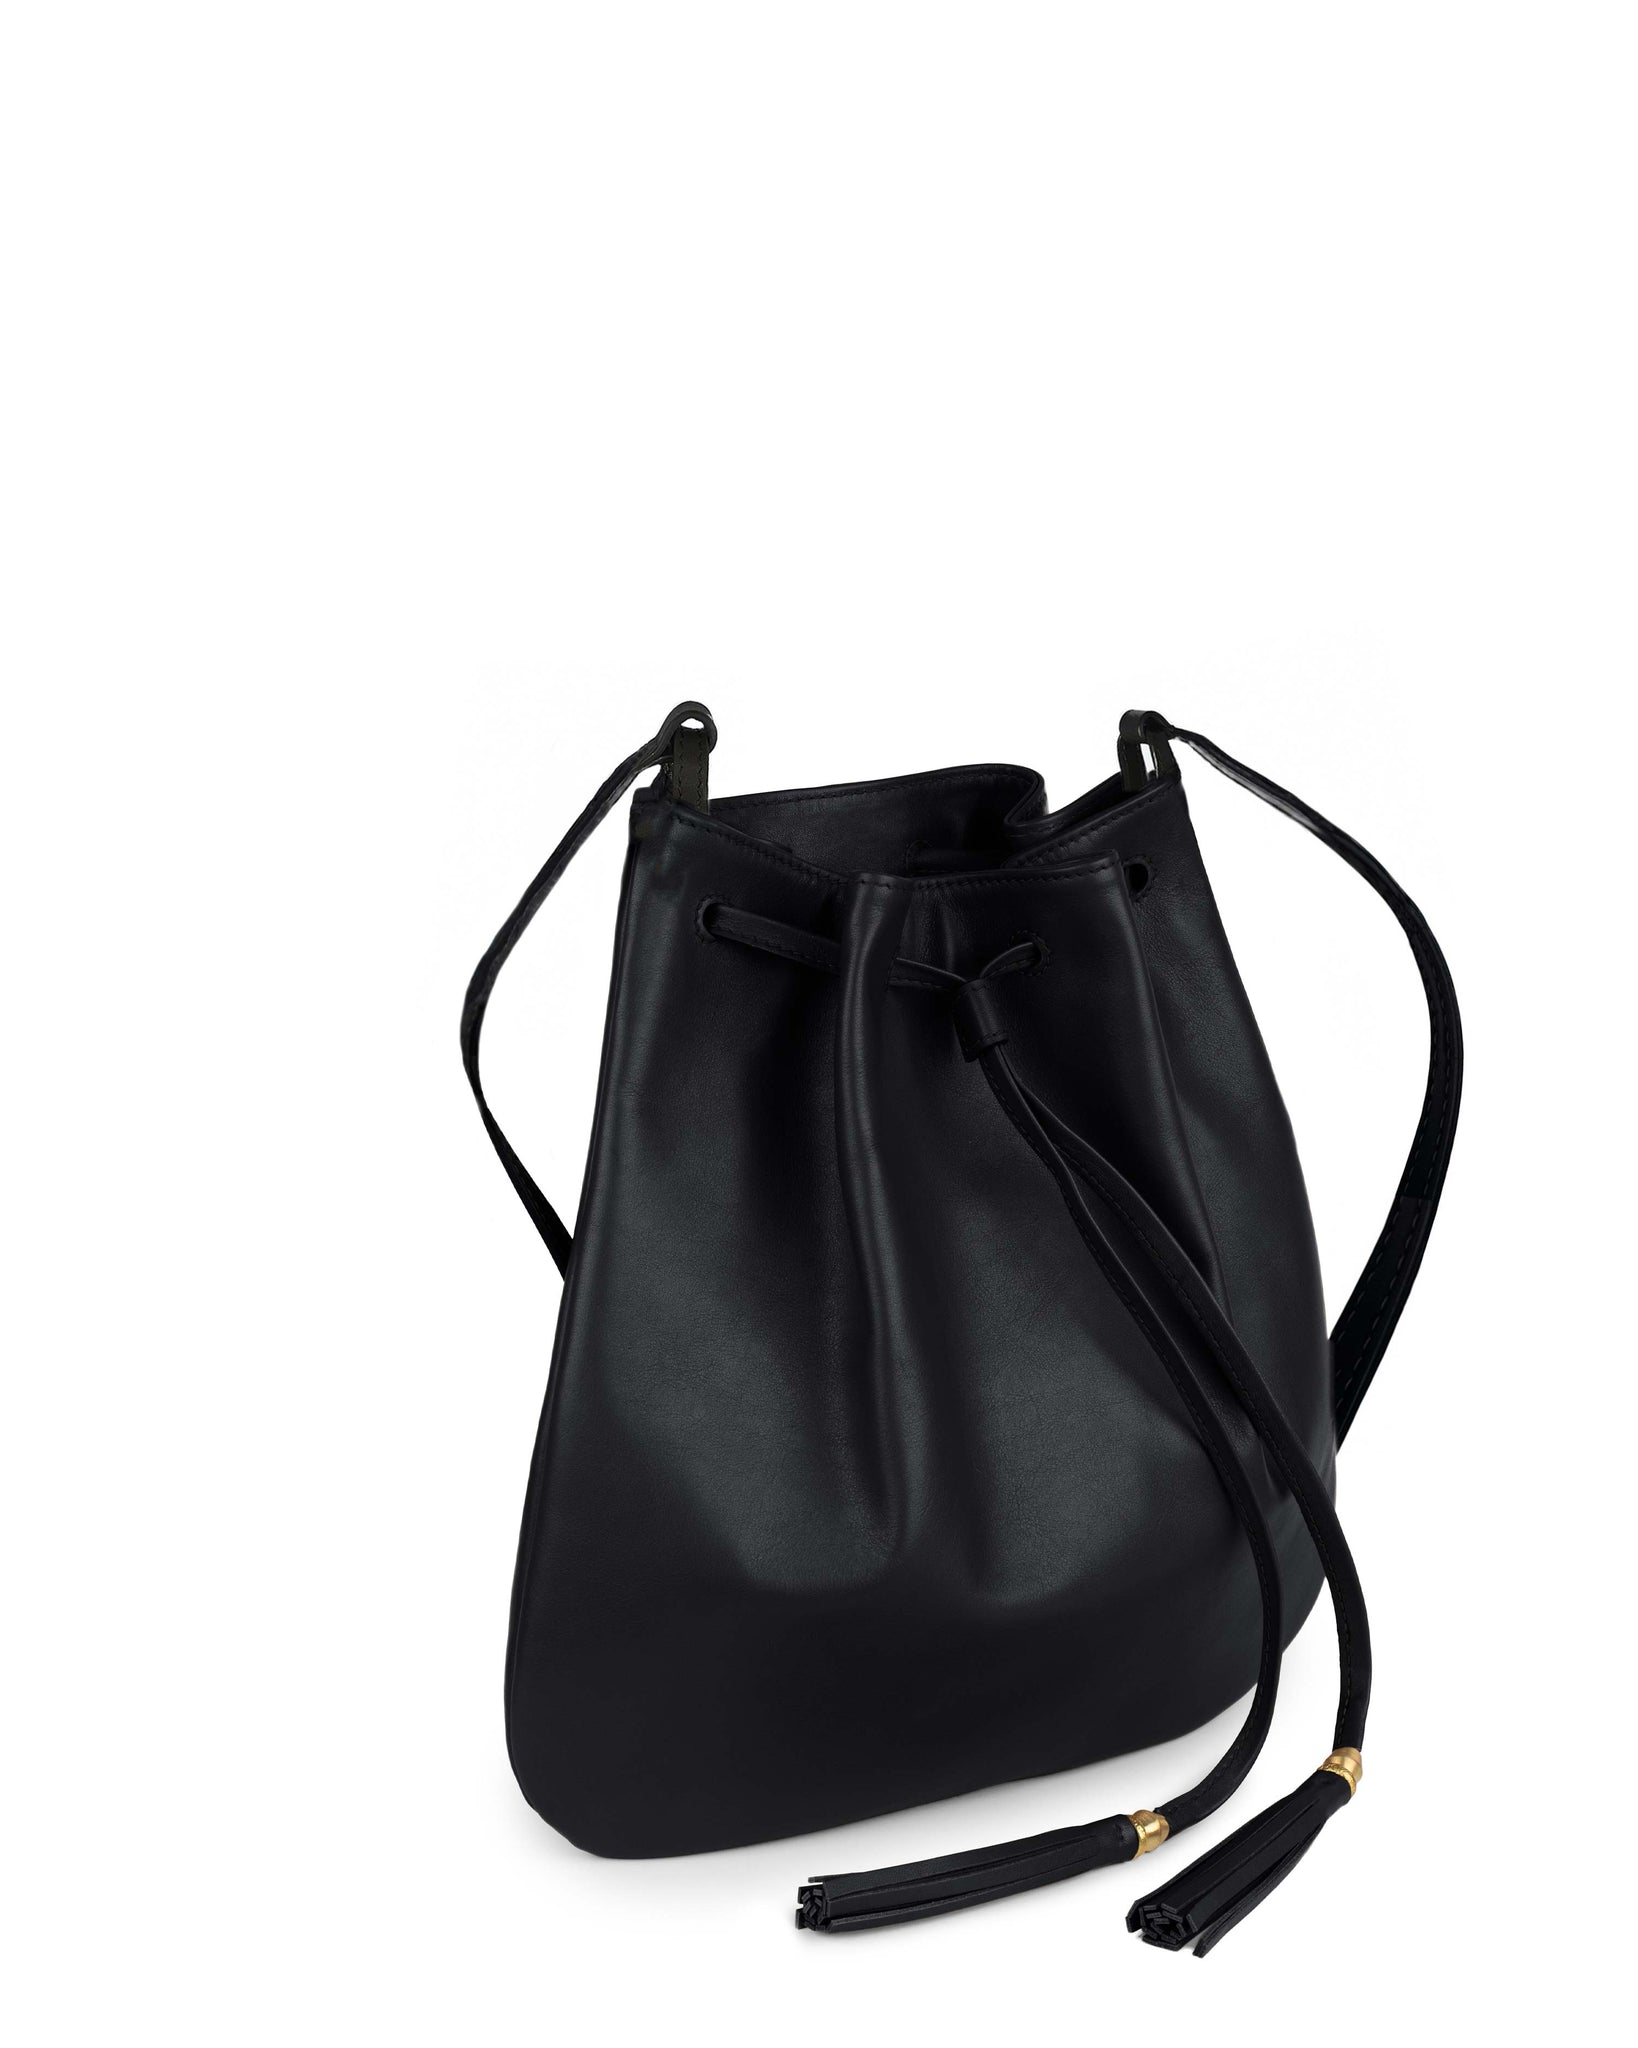 New Arrivals - Women's Bags – BONIA International